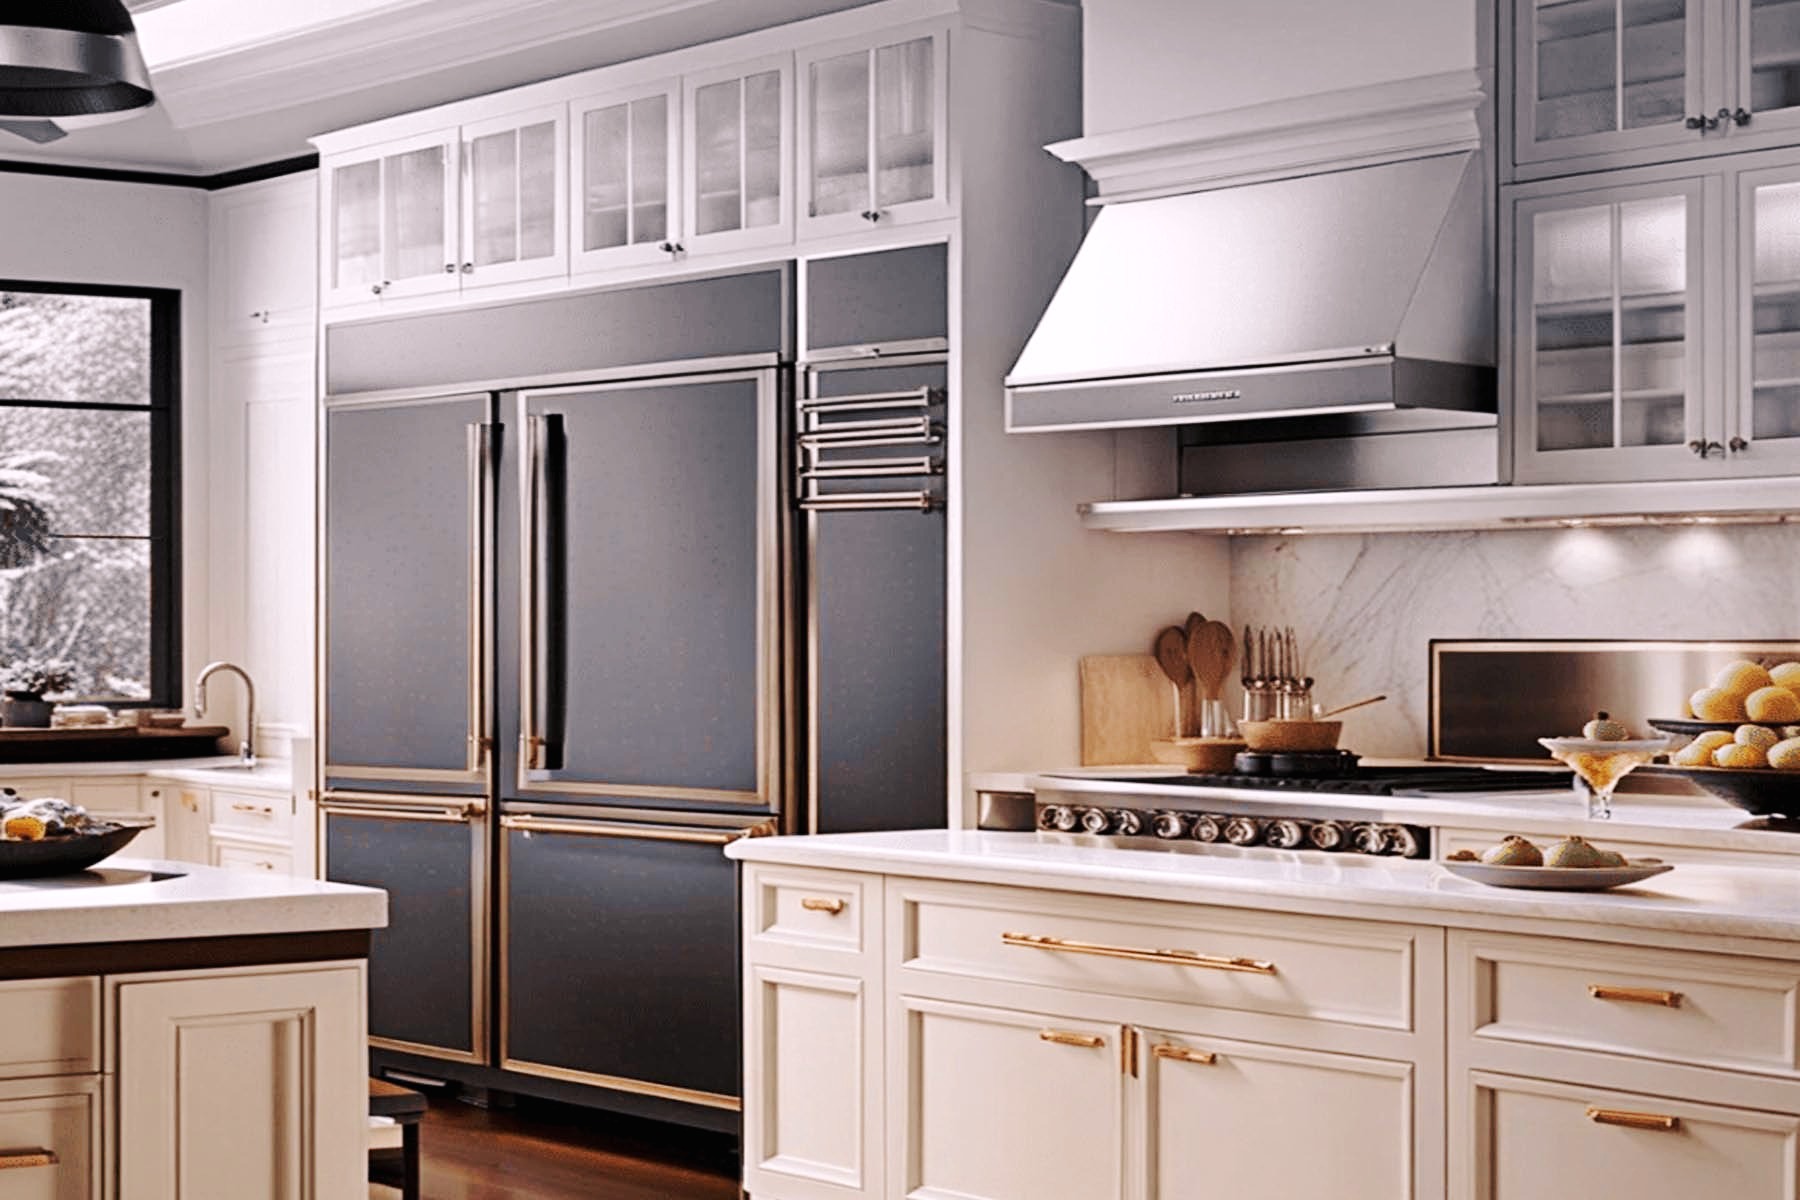 Georgetown Appliance Repair: Sub-Zero Luxury Refrigerator Repair Services